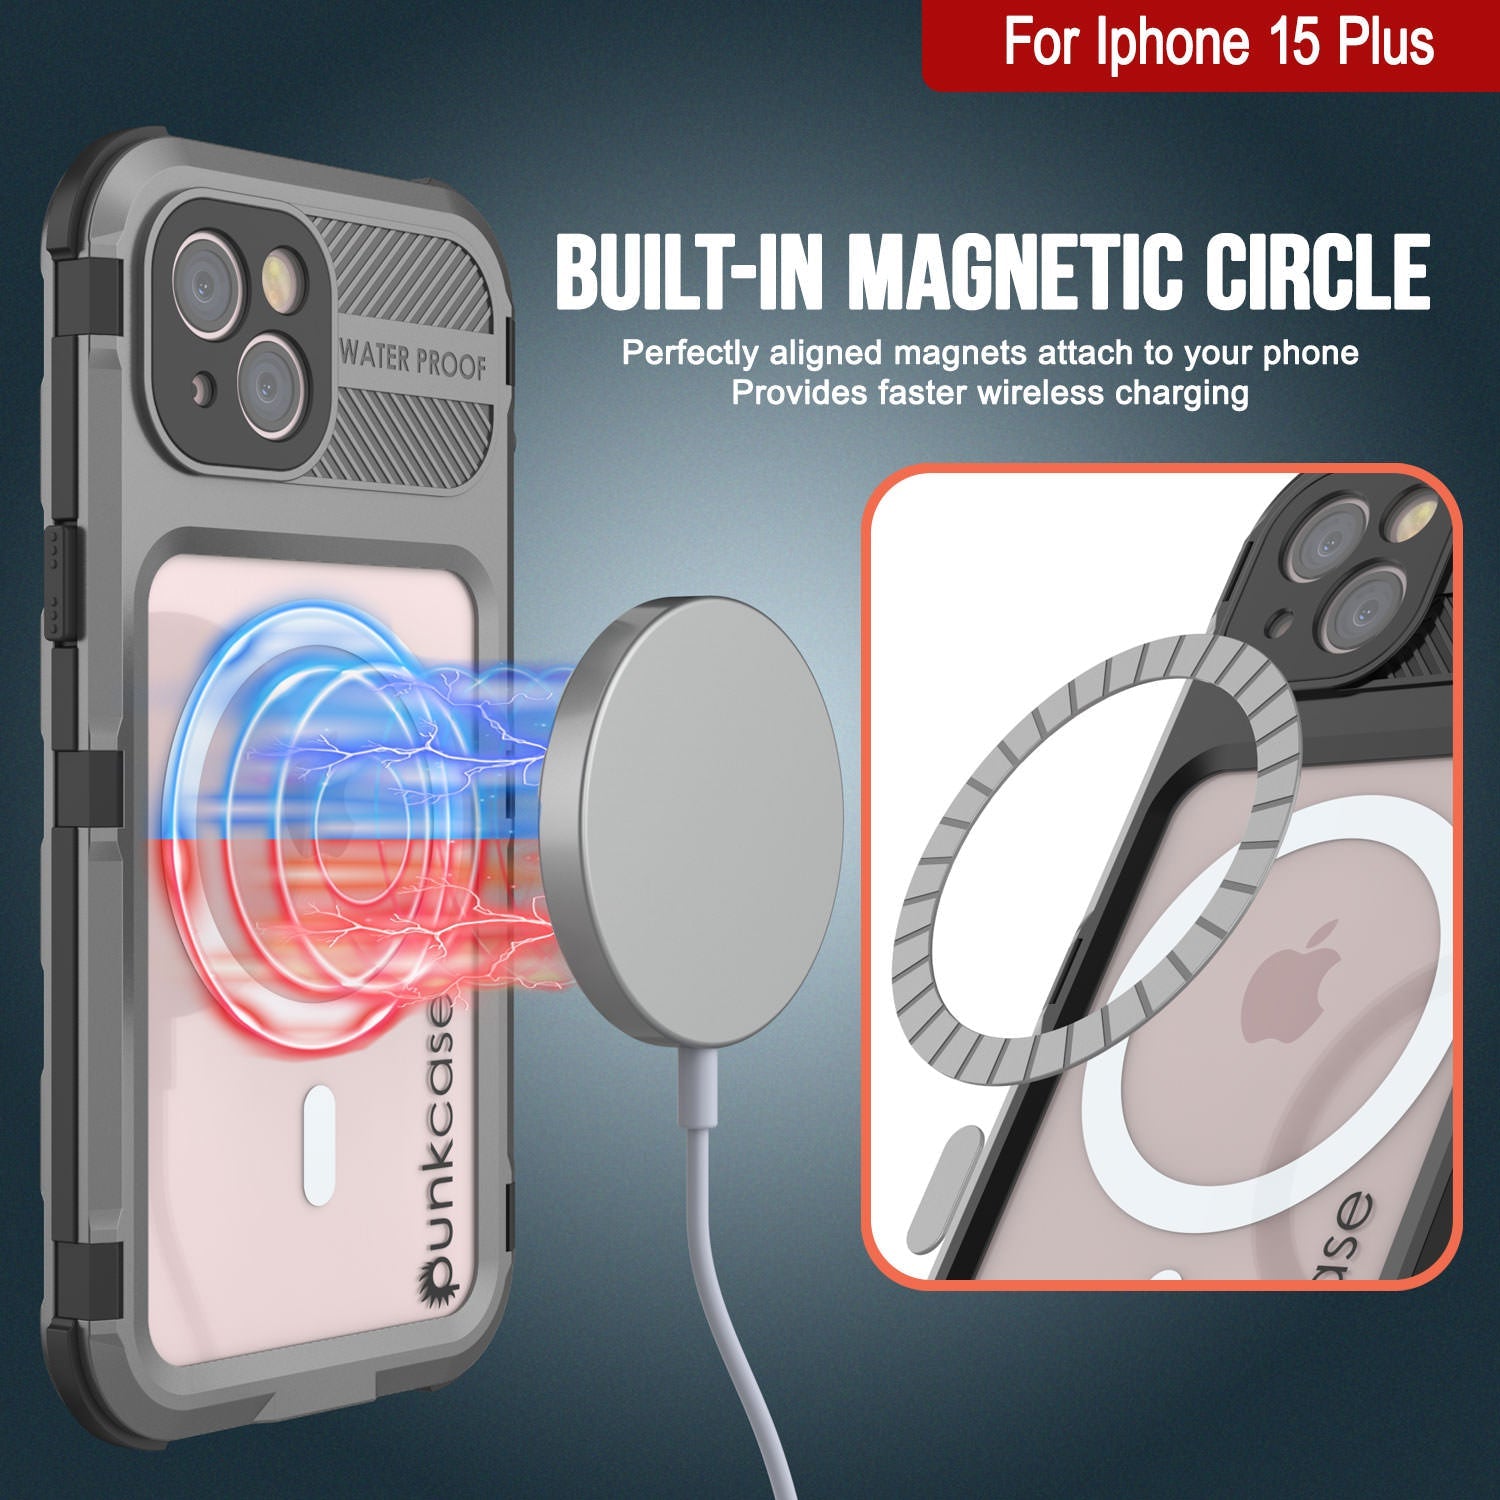 iPhone 15 Plus Metal Extreme 2.0 Series Aluminum Waterproof Case IP68 W/Buillt in Screen Protector [Silver]